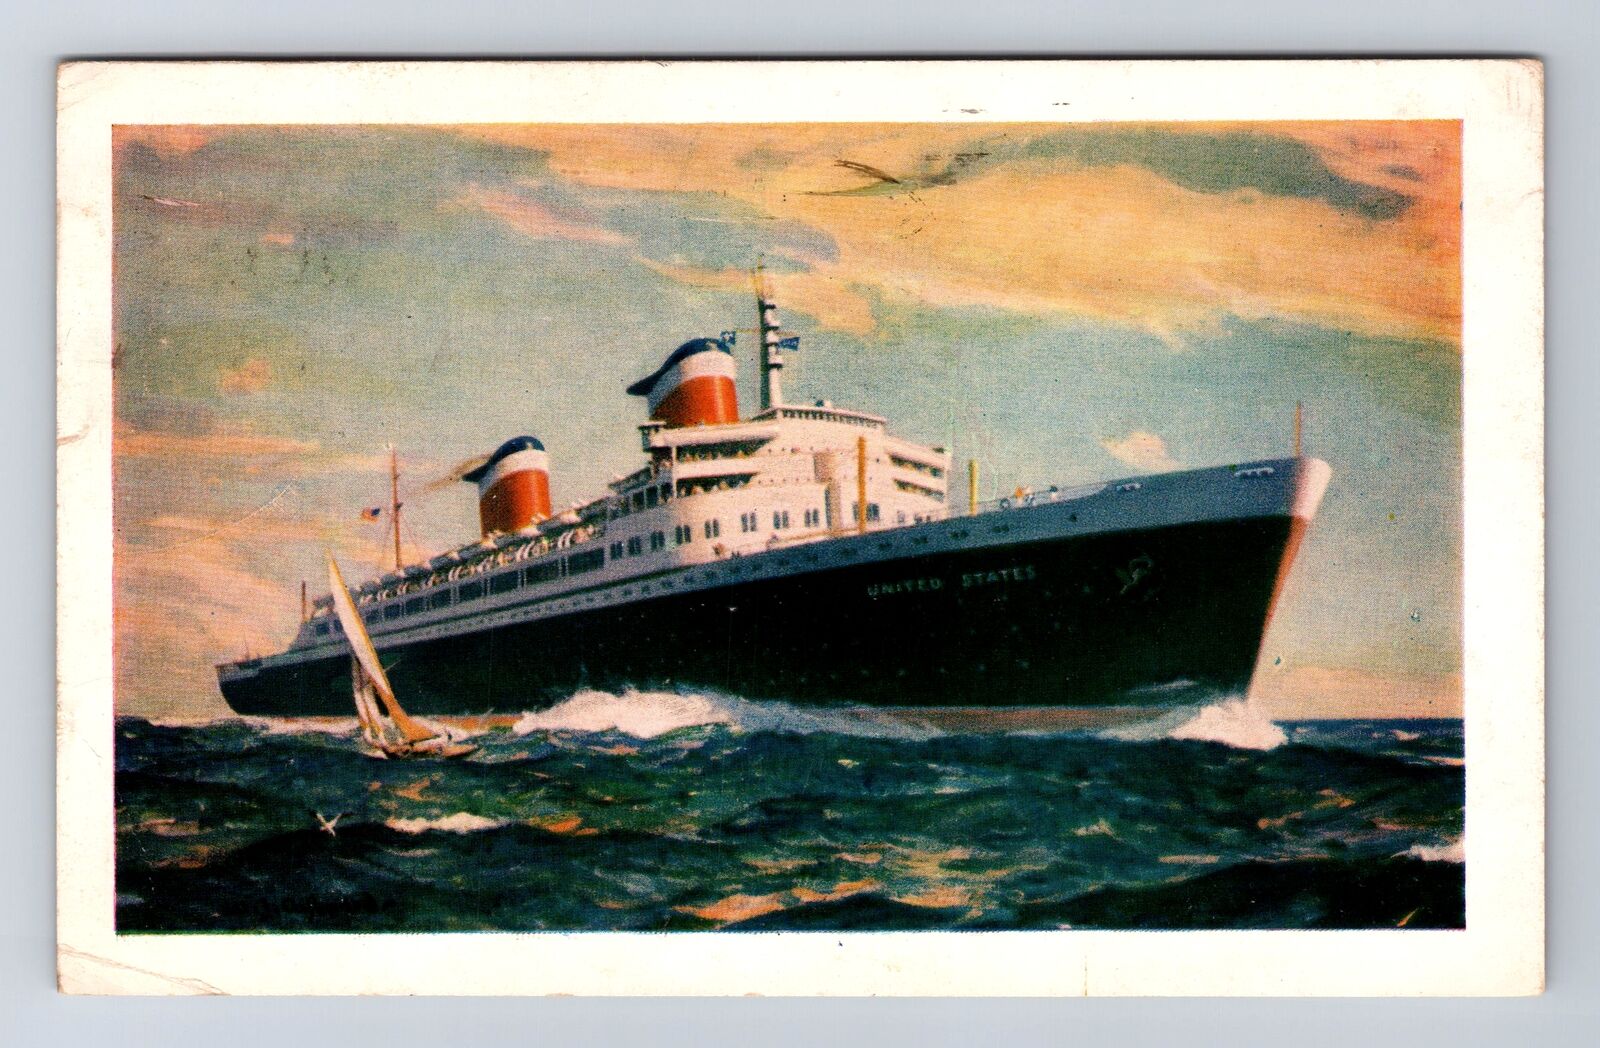 New SS United States, Ship, Transportation, Antique, Vintage c1953 Postcard